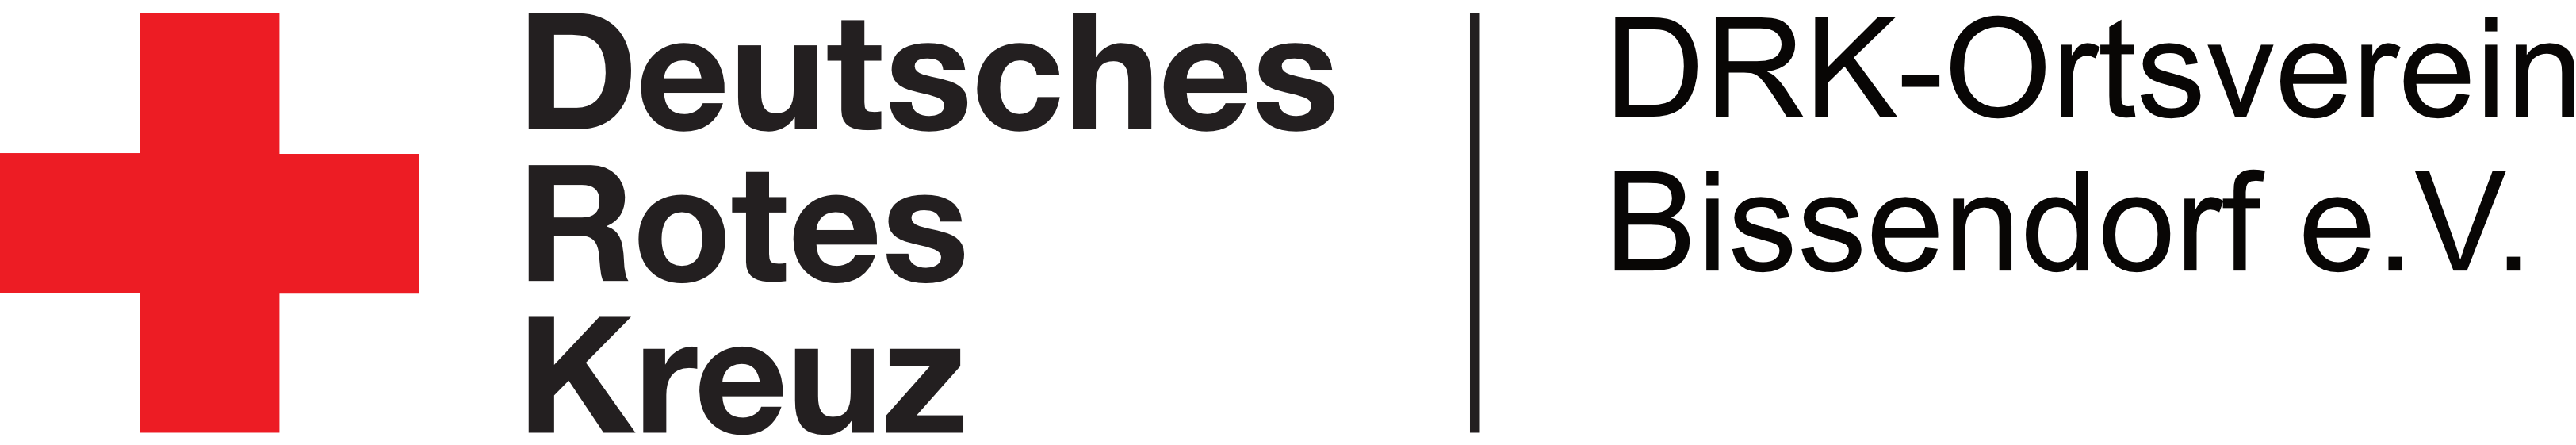 DRK Logo horizontal